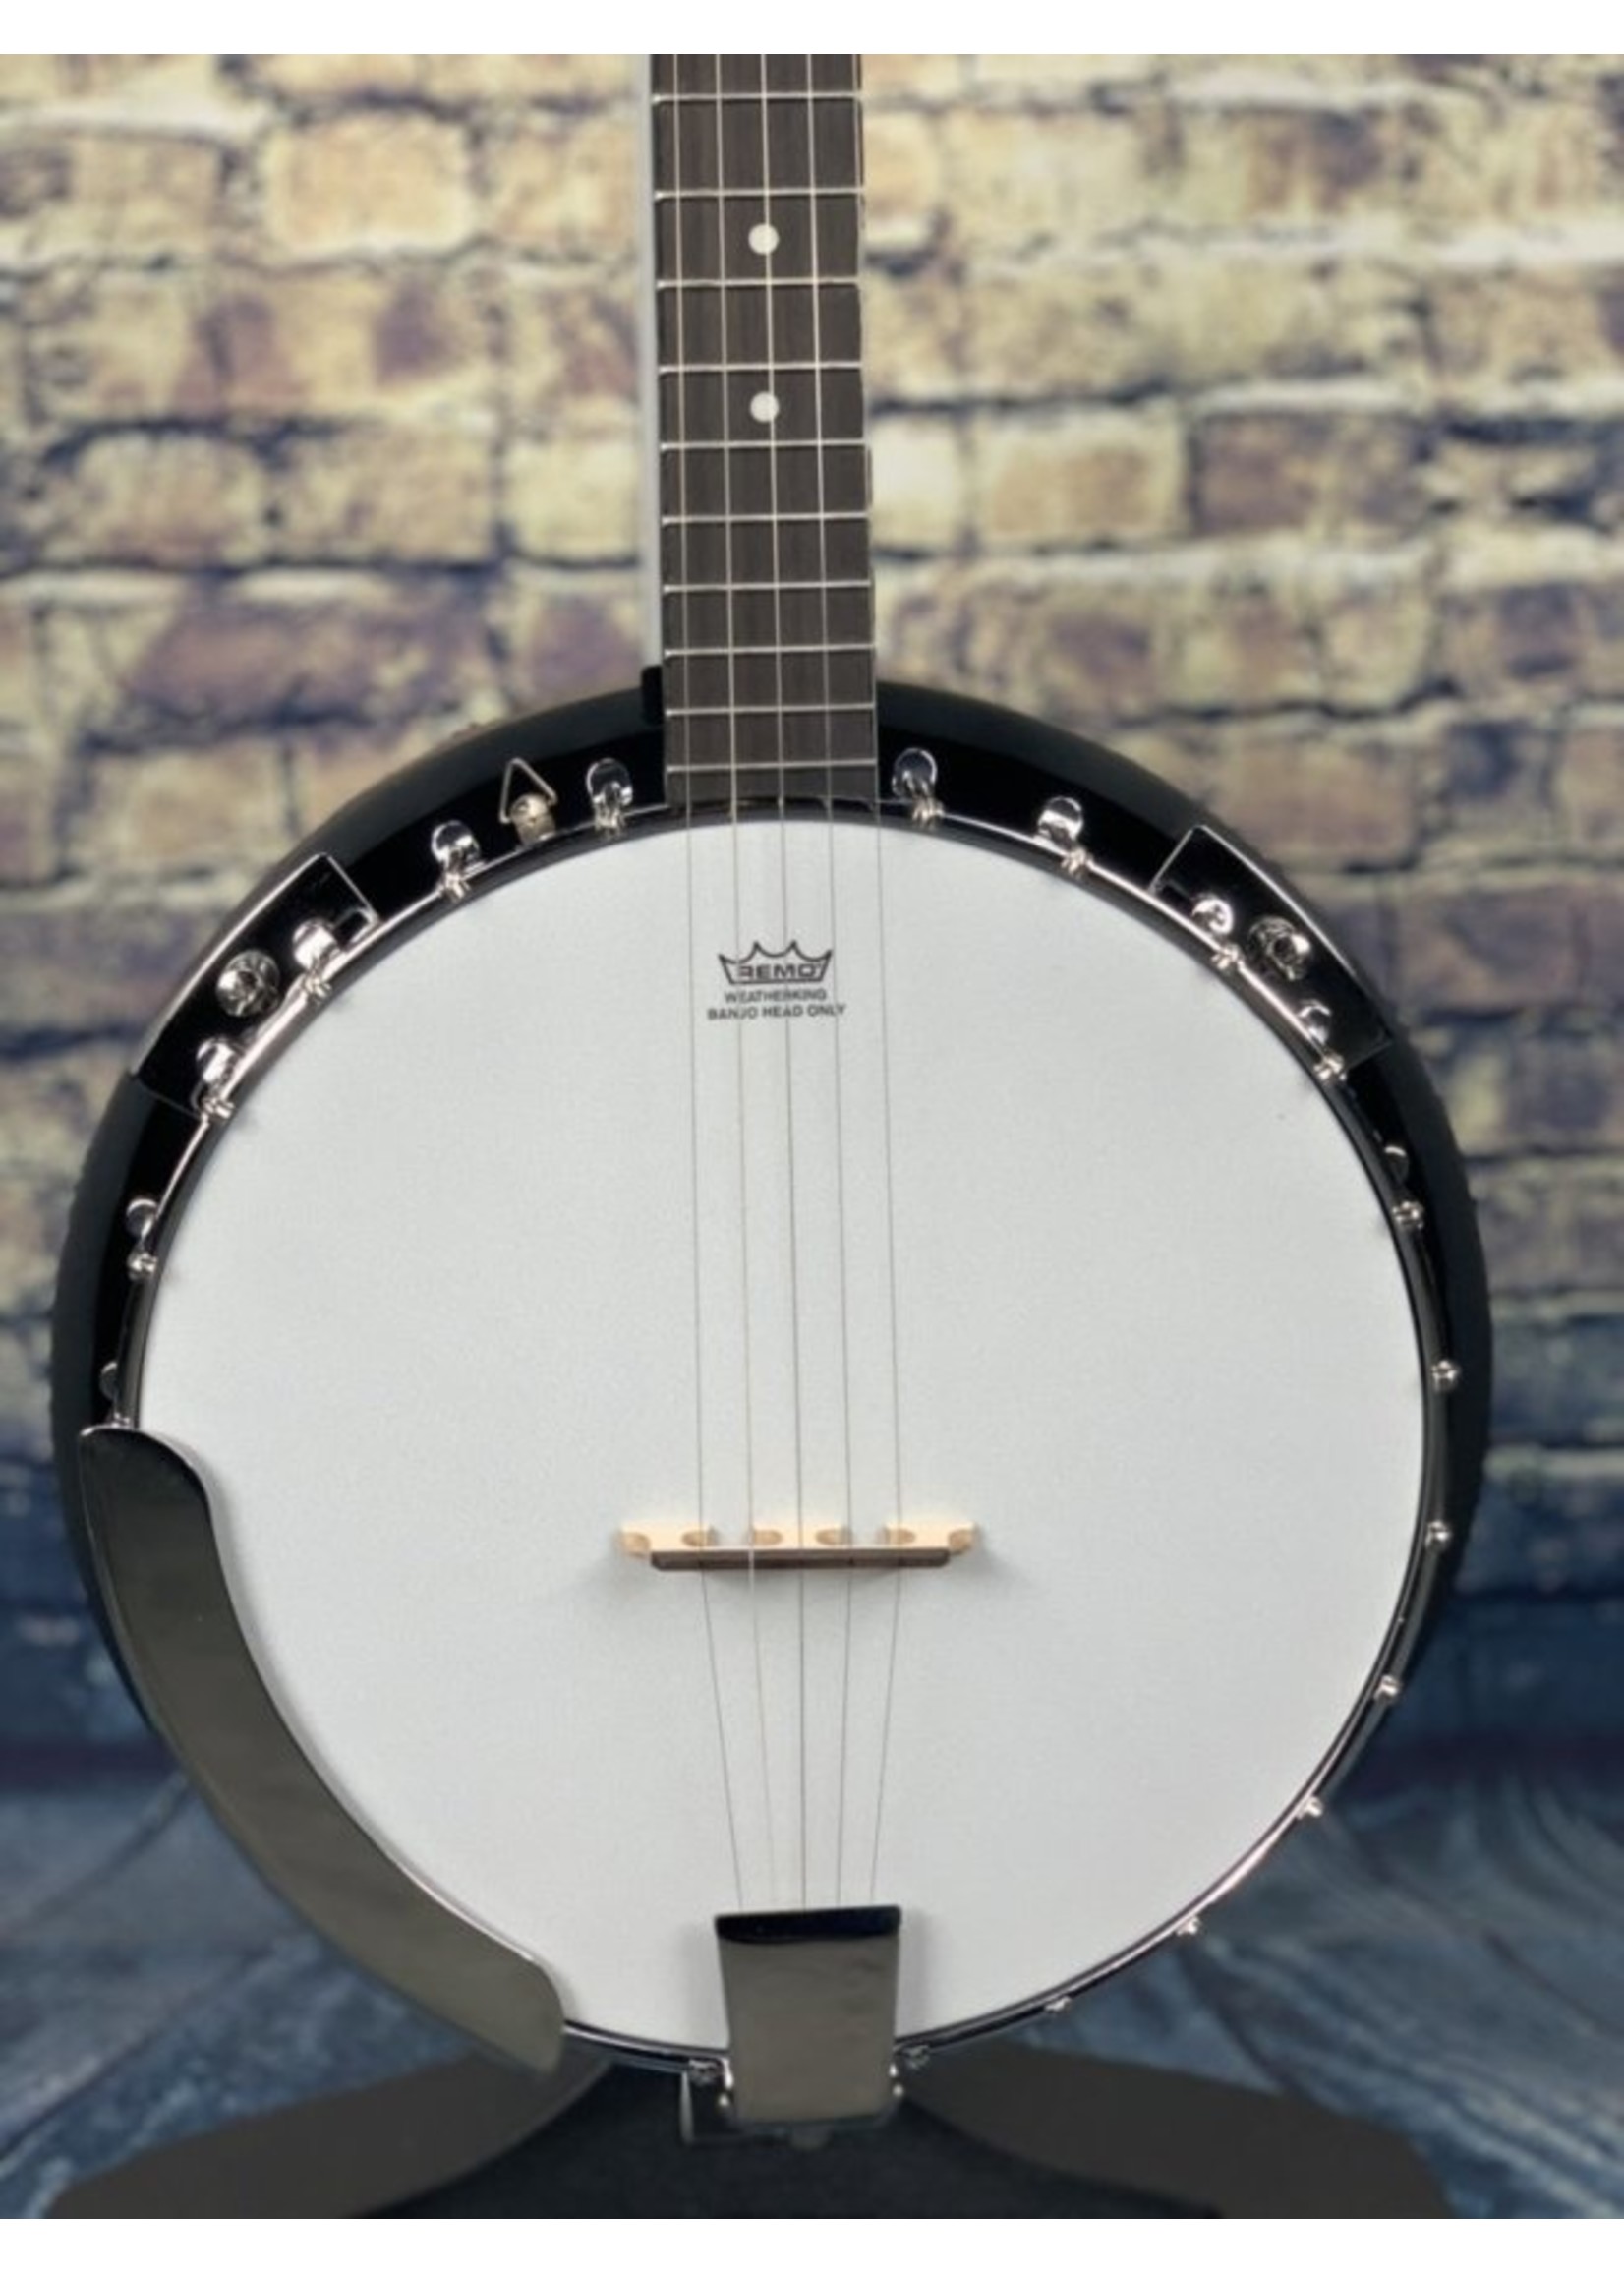 morgan monroe banjo reviews